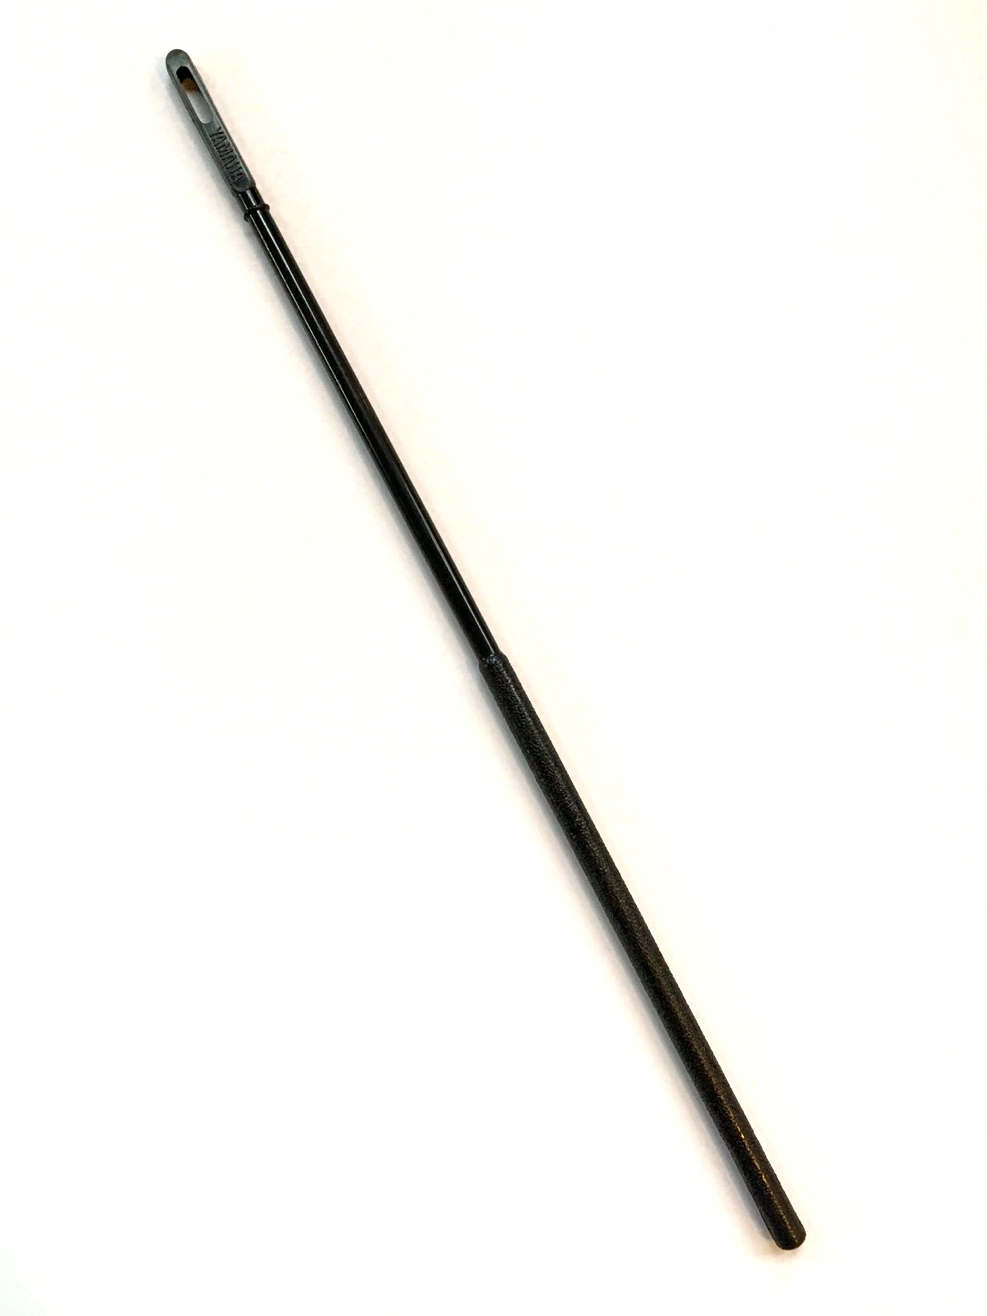 Yamaha soprano or alto recorder cleaning rod